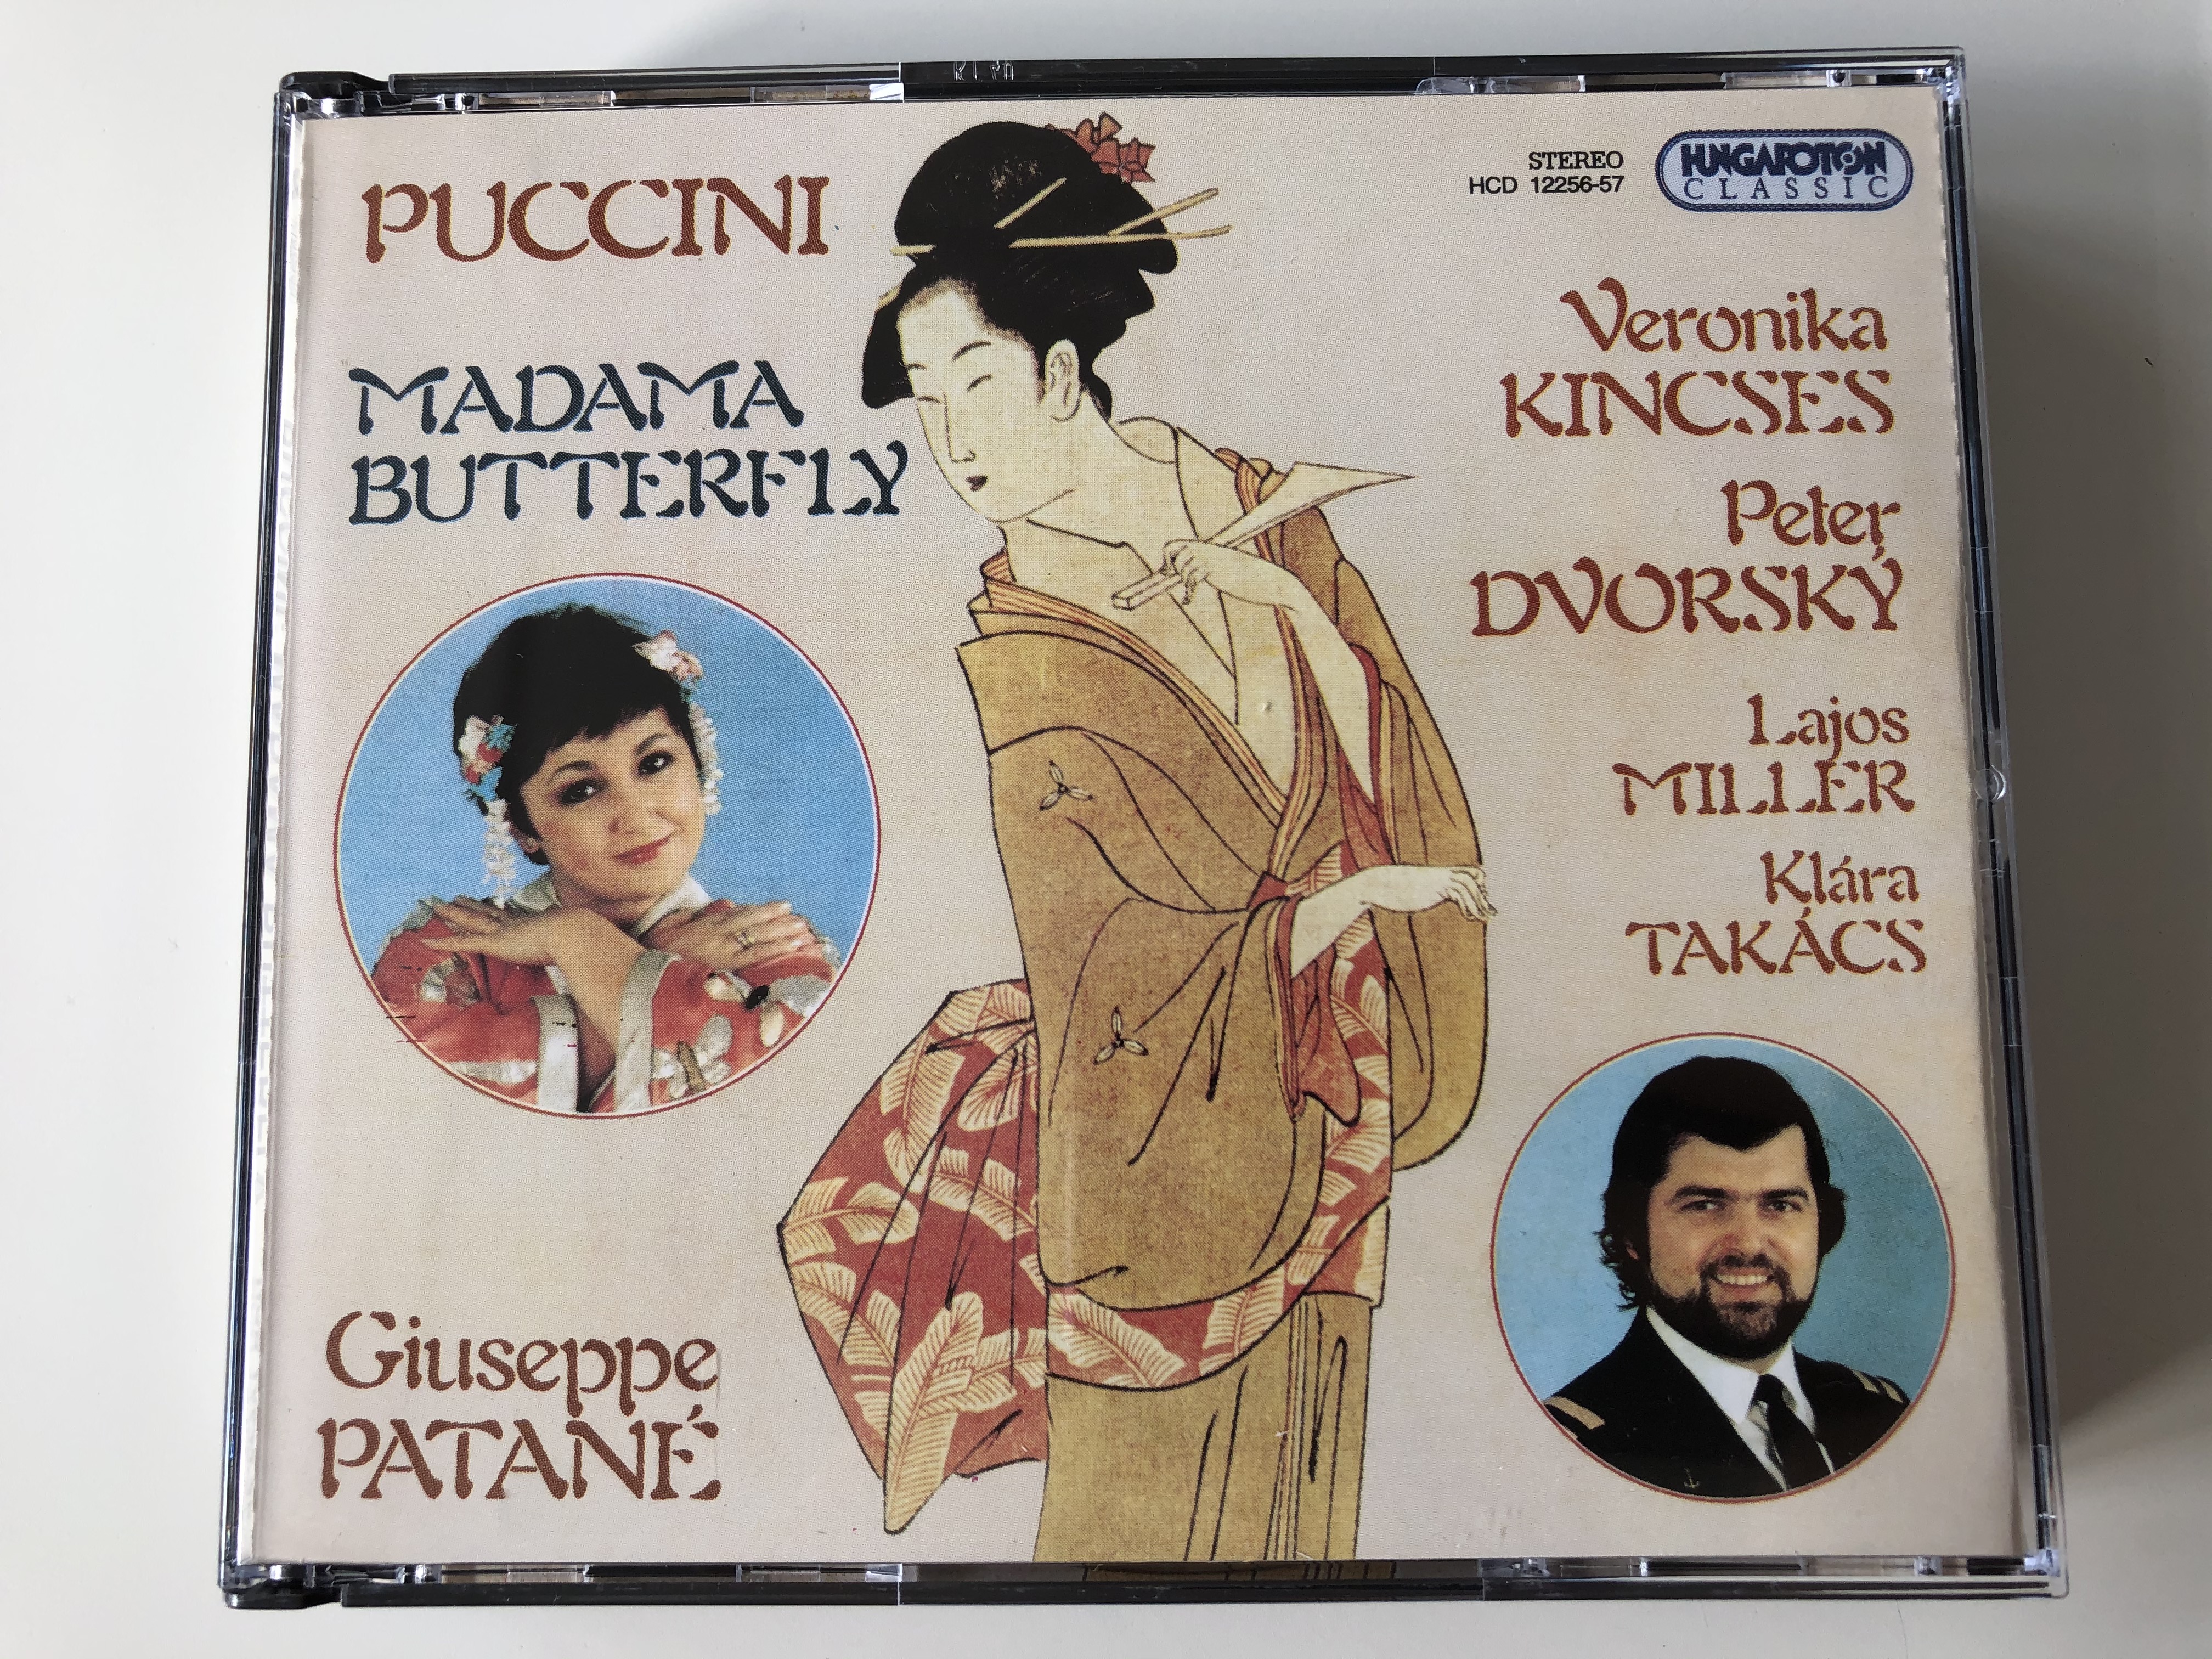 puccini-madama-butterfly-giuseppe-patan-veronika-kincses-peter-dvorsk-lajos-miller-kl-ra-tak-cs-hungaroton-classic-2x-audio-cd-1994-stereo-hcd-12256-57-1-.jpg